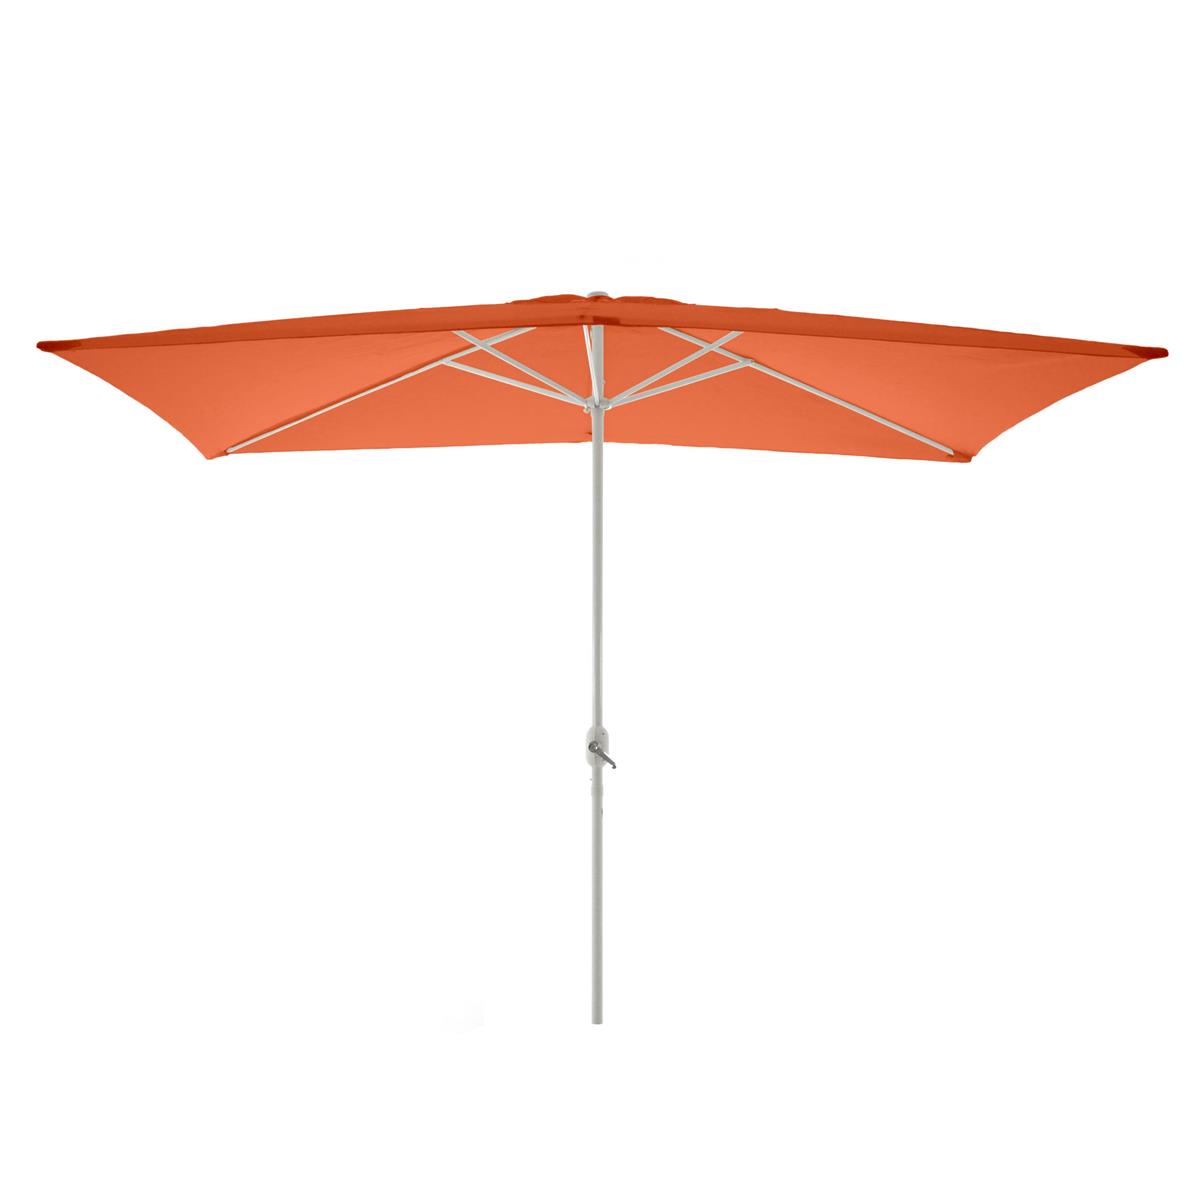 Sonnenschirm eckig 2x3m orange Kurbel Marktschirm Rechteckschirm Sonnenschutz